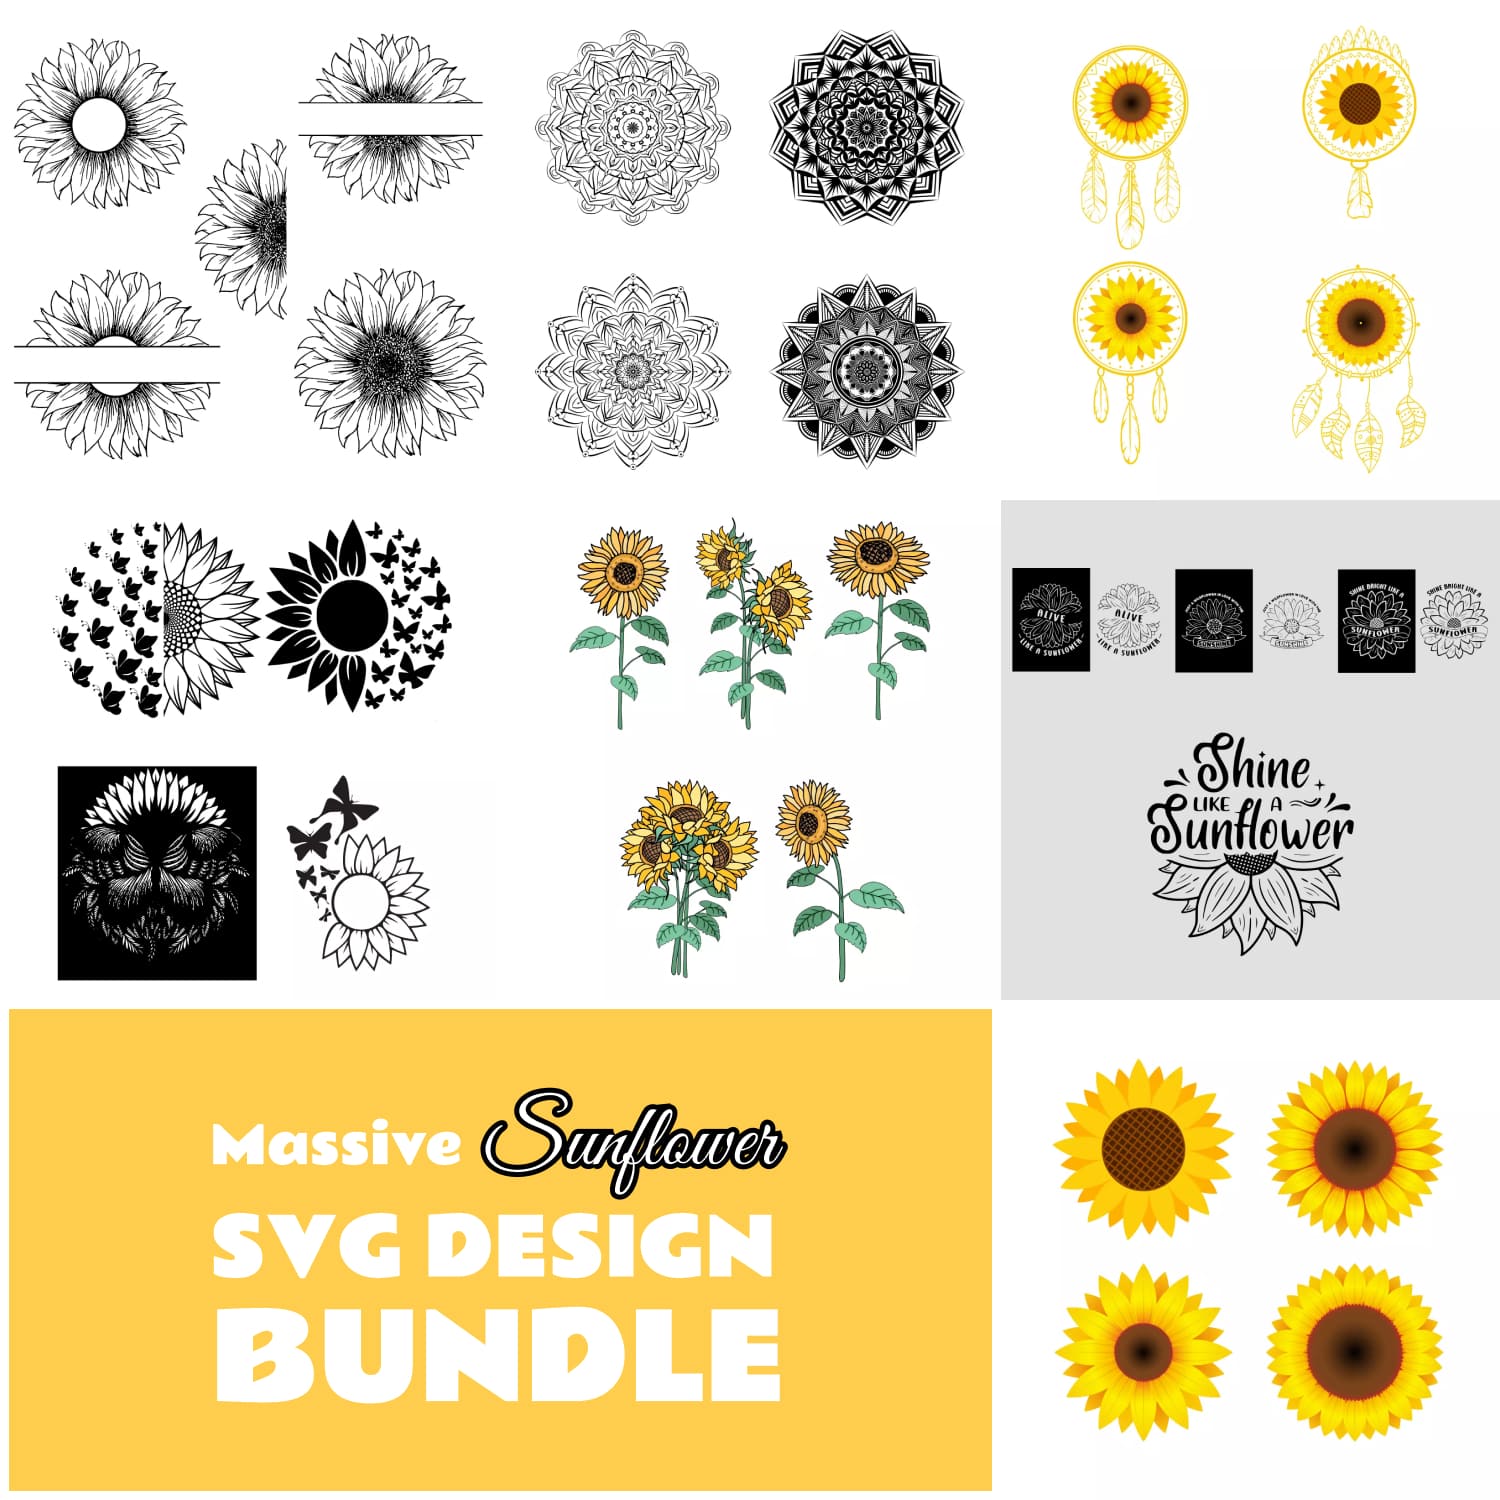 Massive Sunflower SVG Designs Bundle - main image preview.